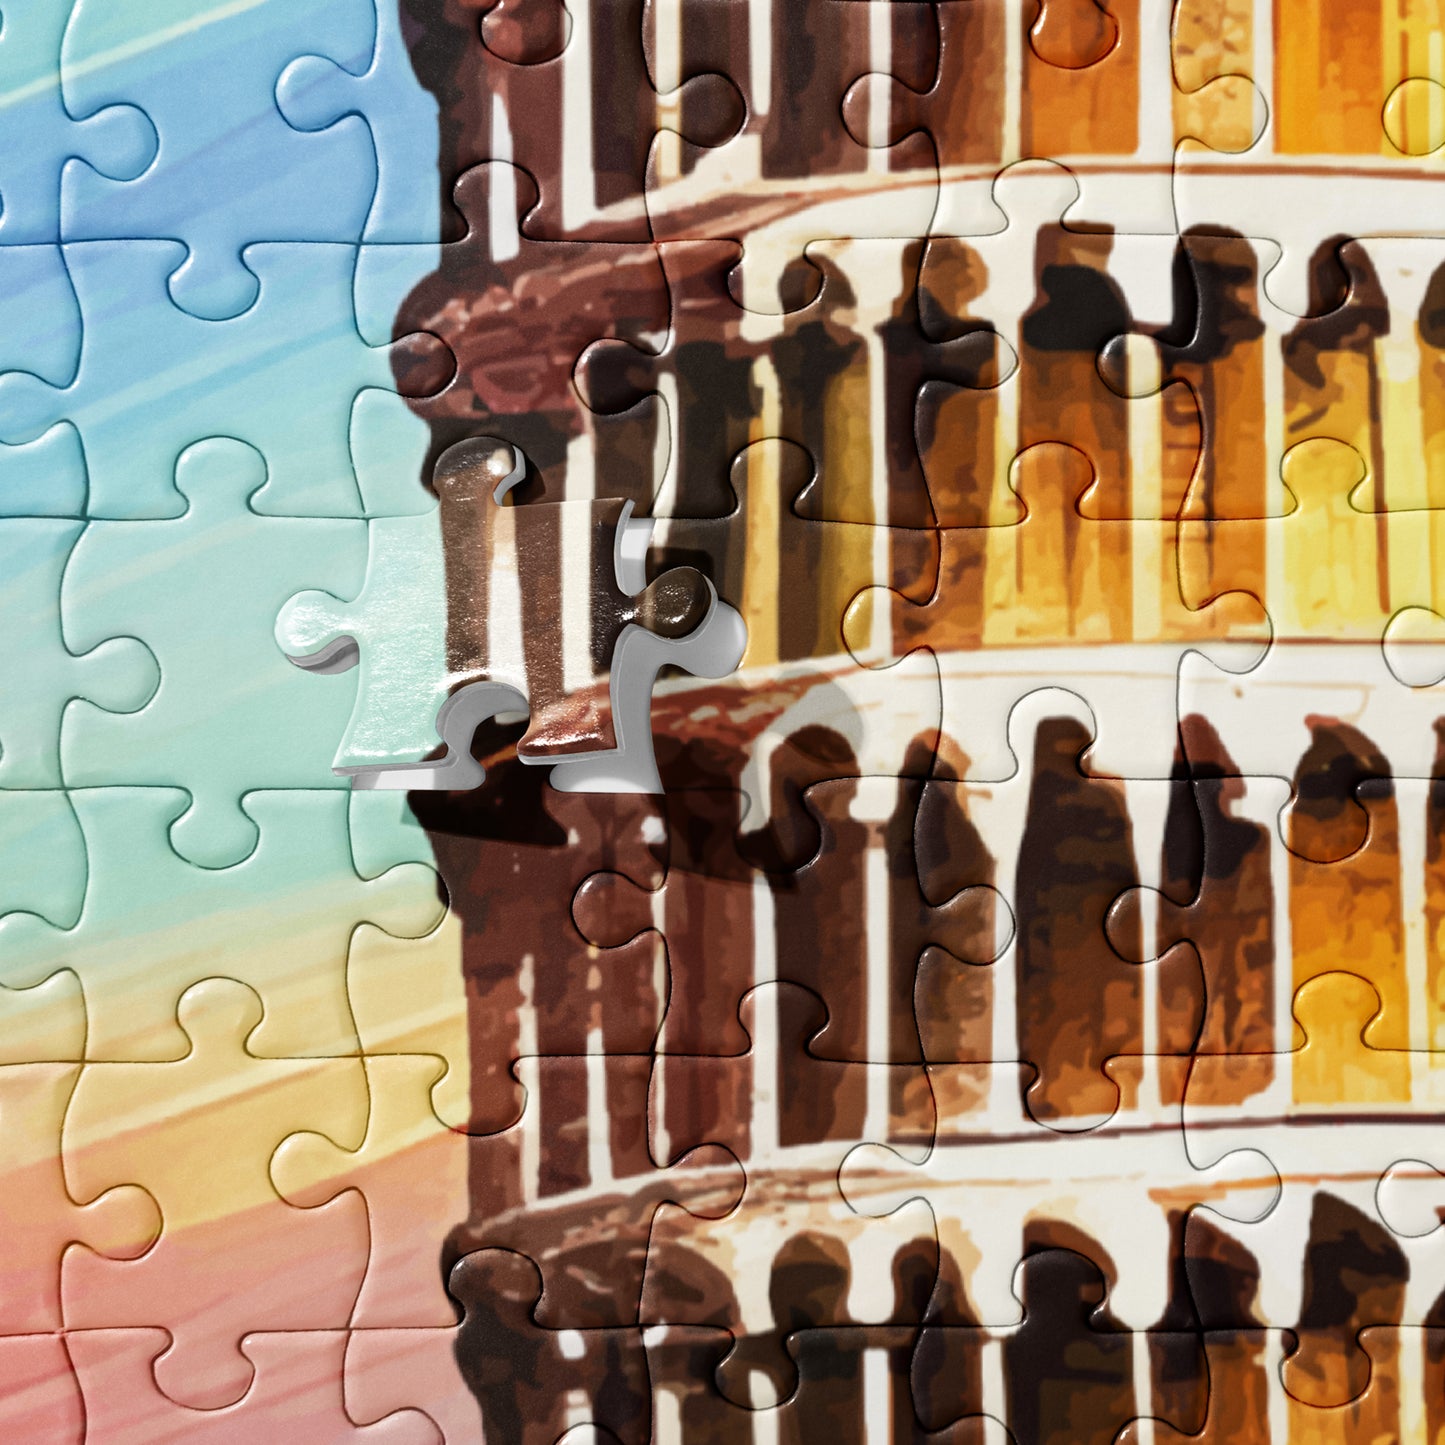 Entertaining Puzzle Activity | Pisa Cityscape | Seepu